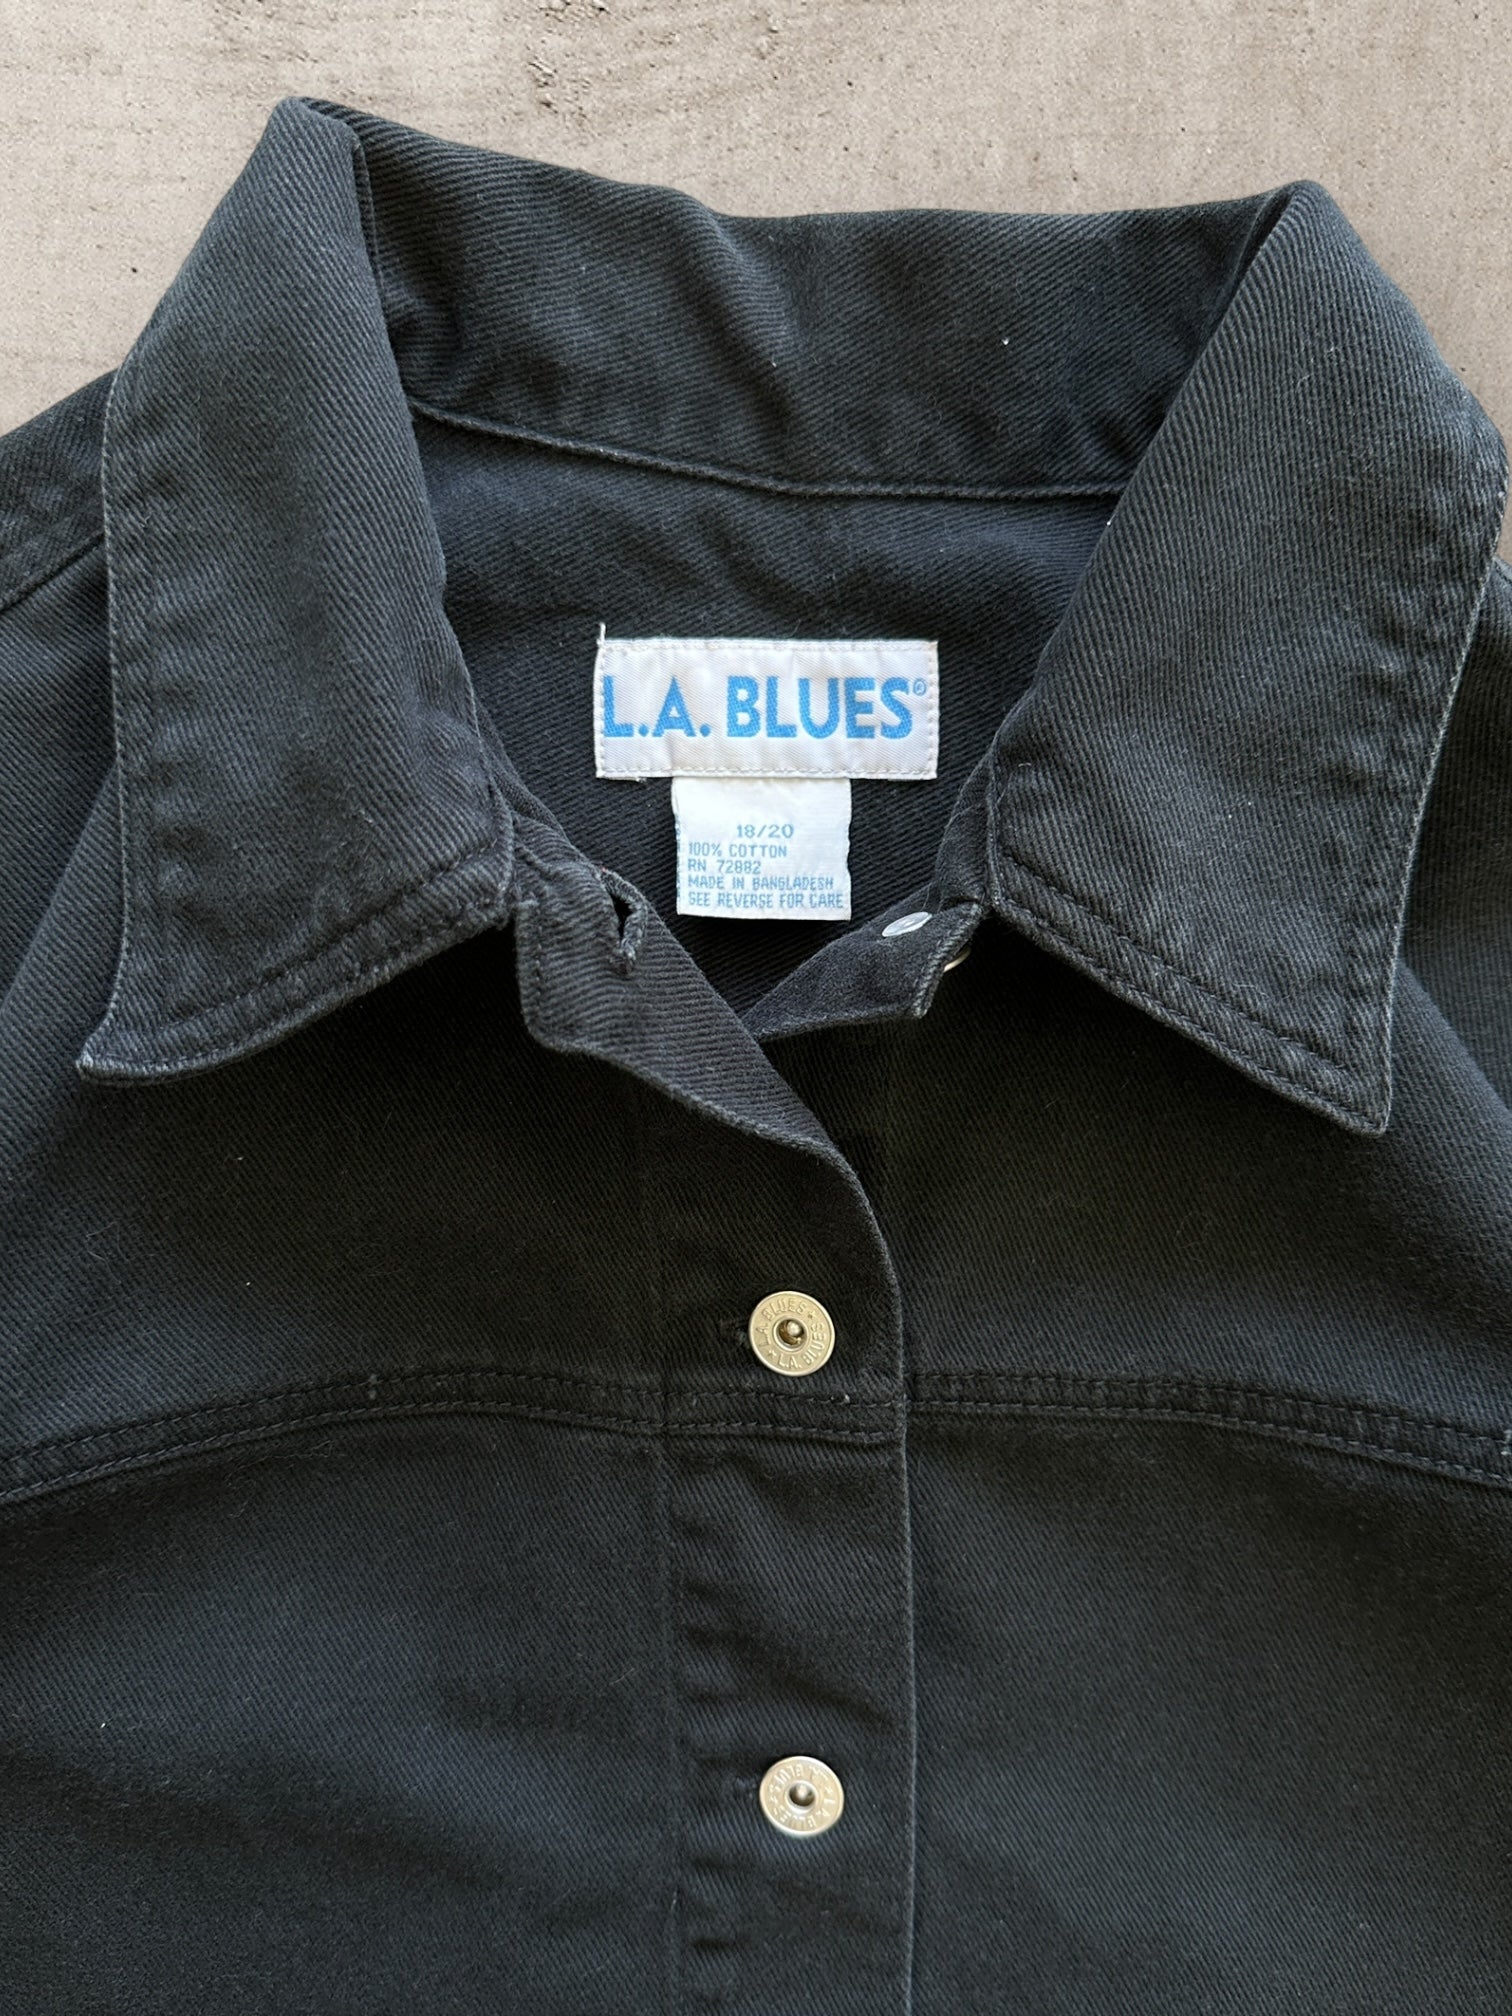 00's L.A Blues Chore Jacket - Large